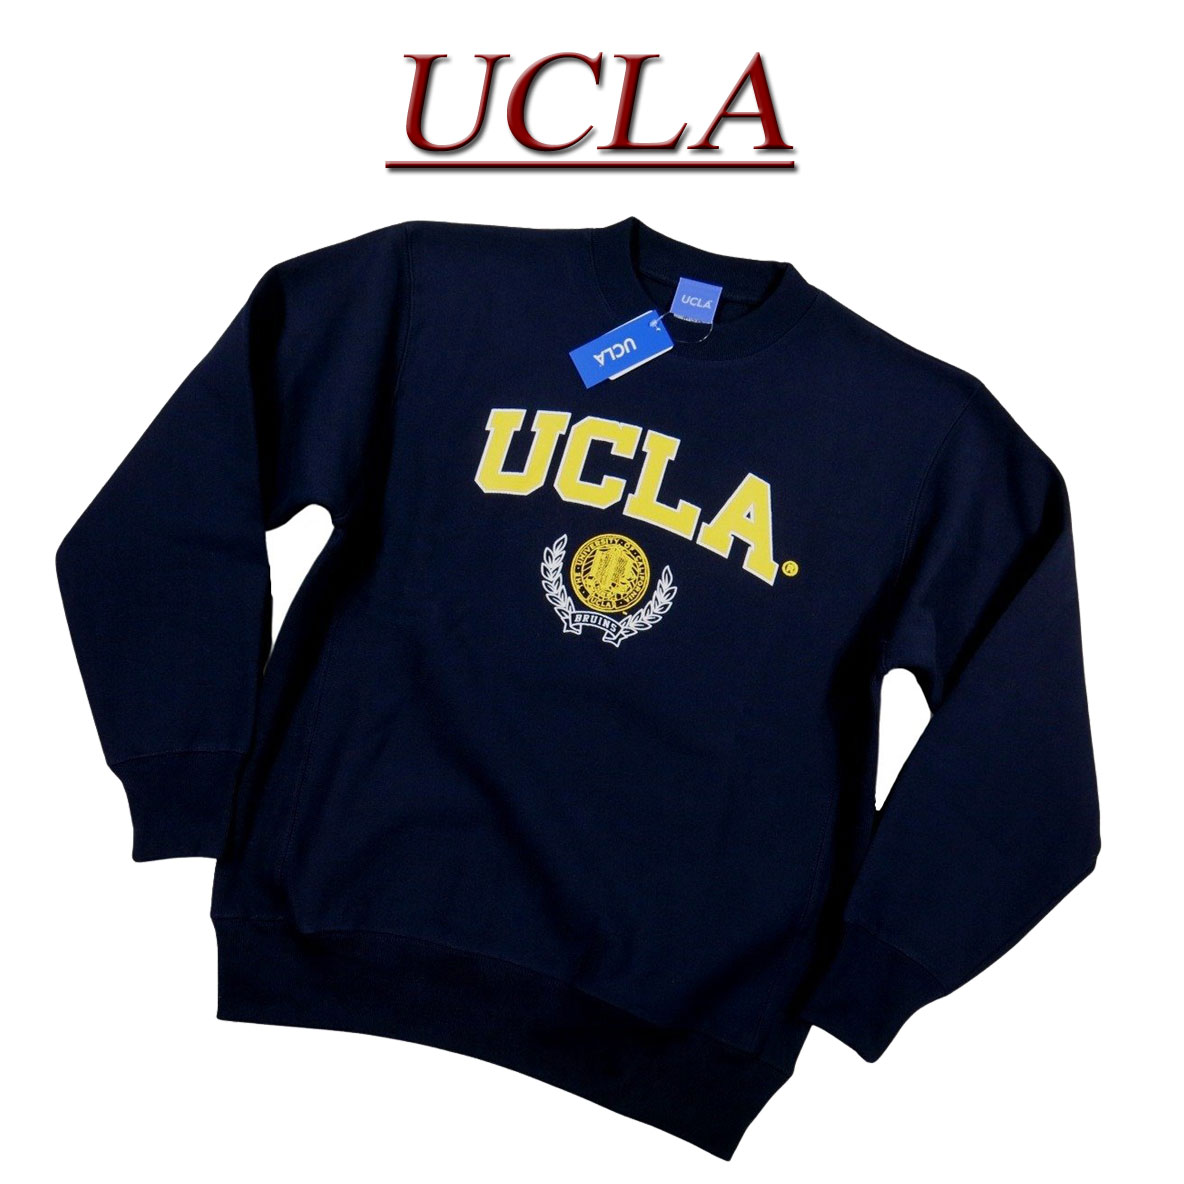  jf781 新品 UCLA カレッジプリント ヘビーウェイト スウェットシャツ UCLA-0515 メンズ カリフォルニア大学 ロサンゼルス校 L/S COLLEGE SWEATSHIRT ユーシーエルエー 裏起毛 スエット トレーナー 